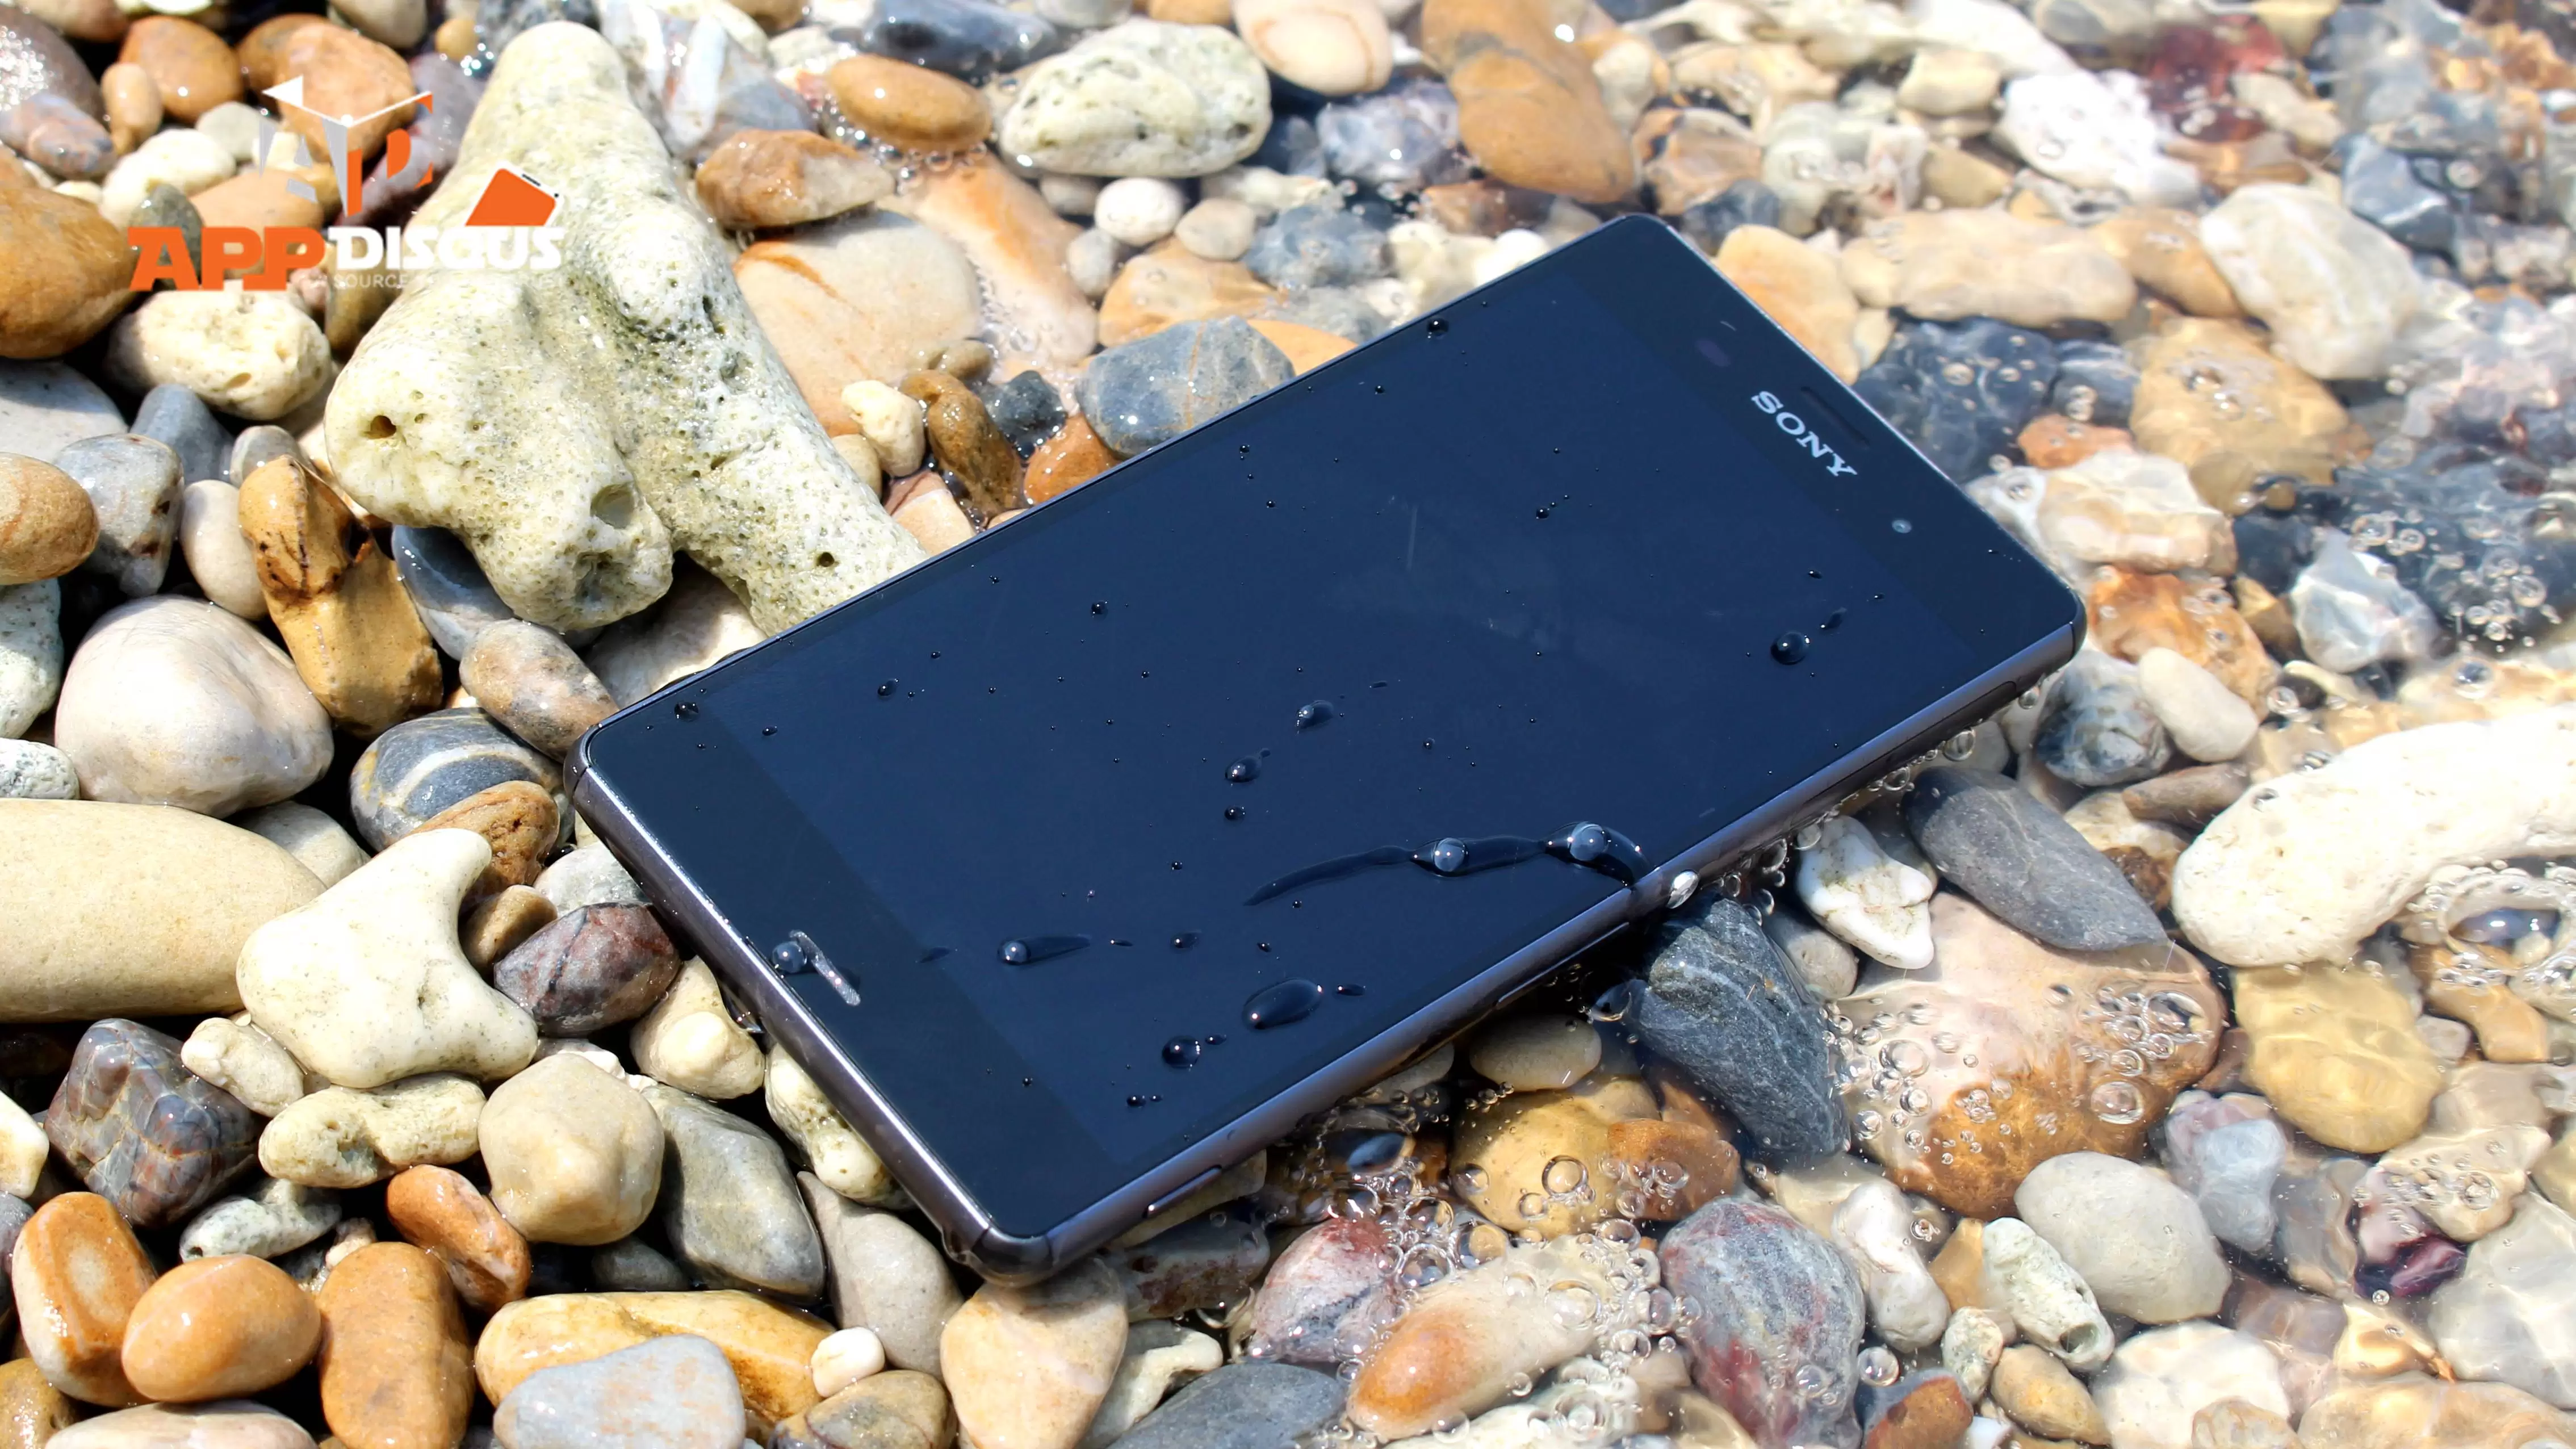 reviews SONY Xperia Z3 1 | Flagship | [ข่าว] Sony ยังคงปล่อยคลิปโปรโมท Xperia Z3 กับสิ่งที่เรือธงมากมายทำไม่ได้